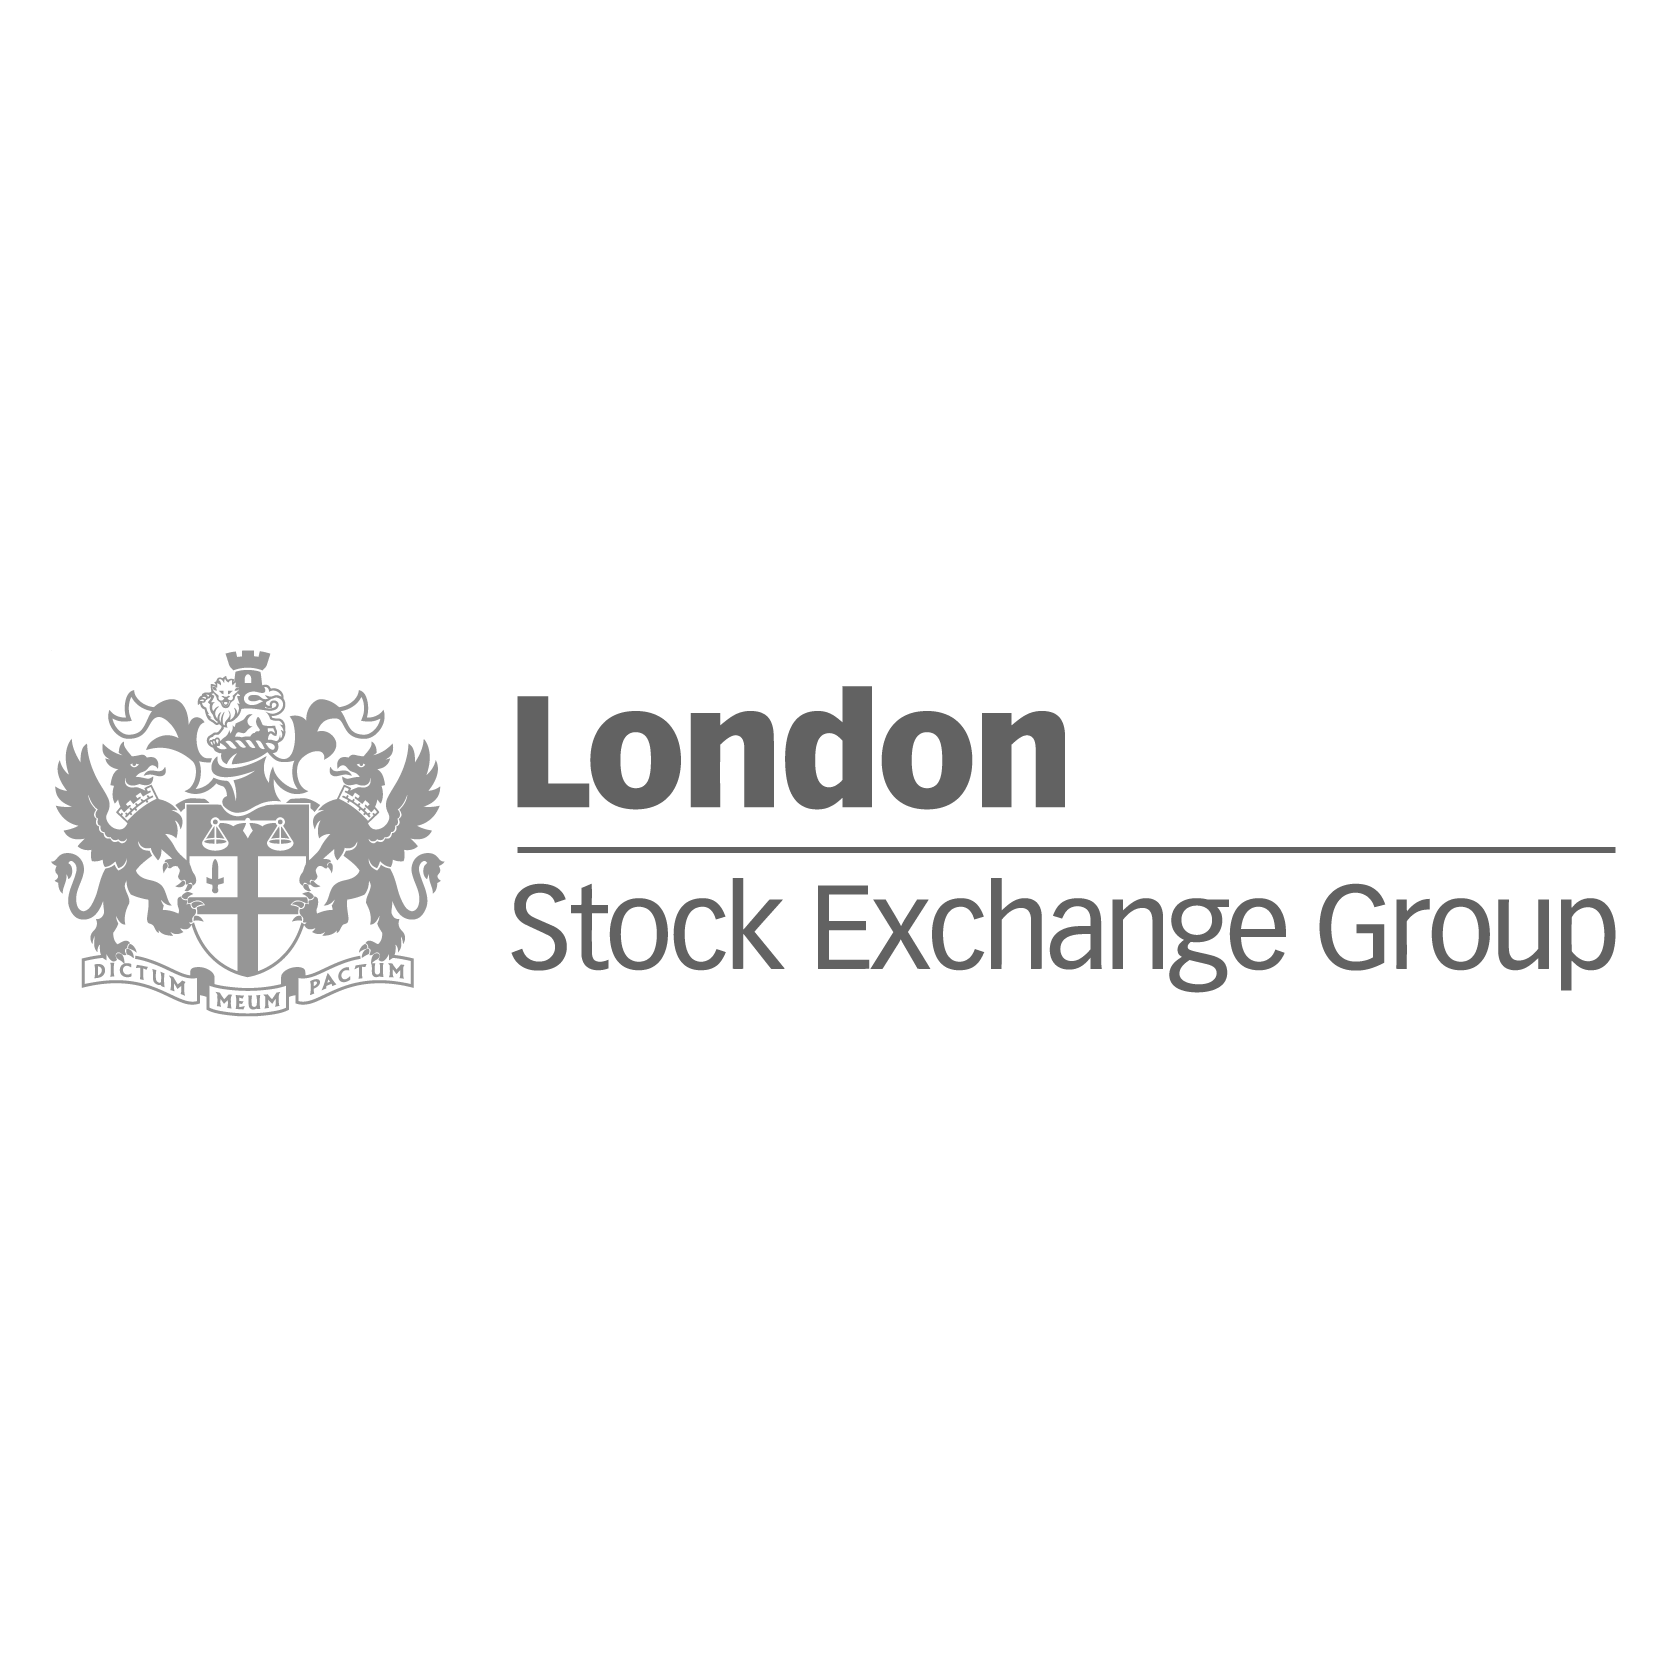 London Stock Exchange Group-01